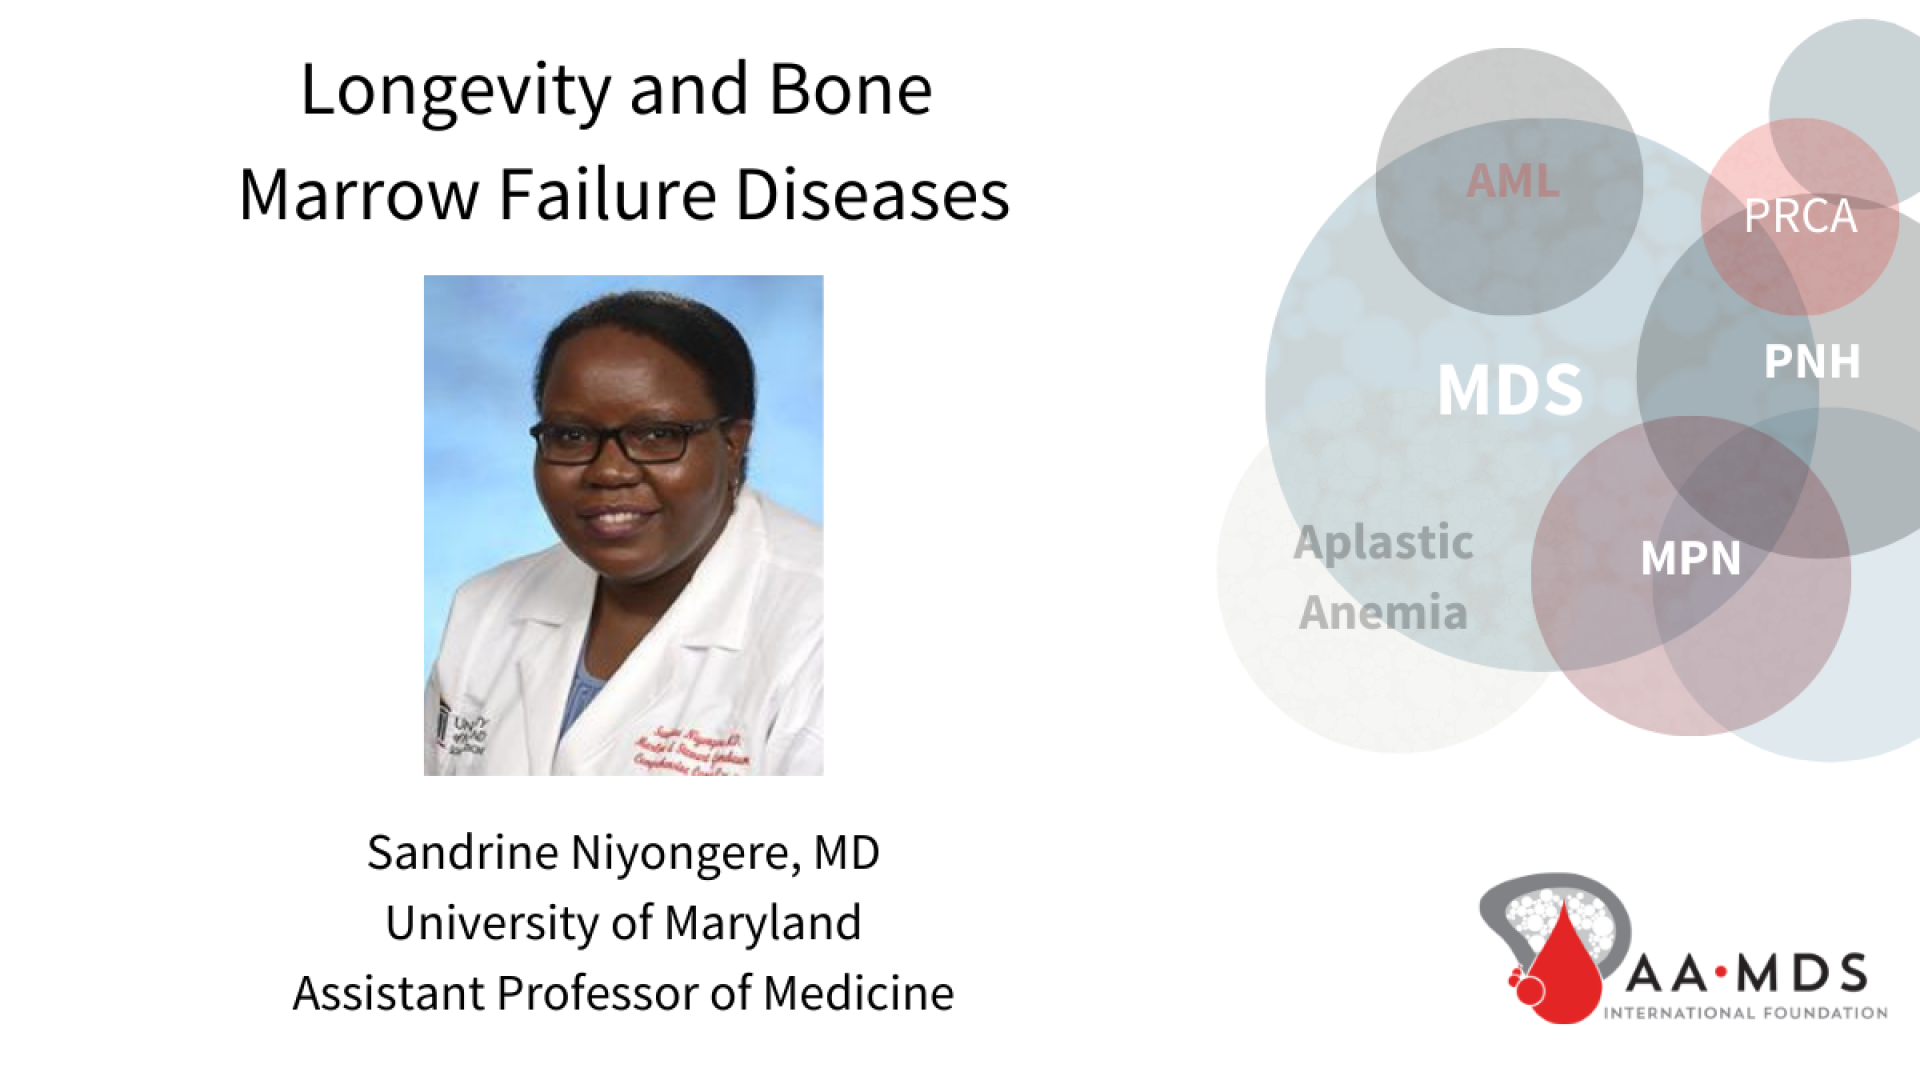 longevity and bone marrow failure diseases